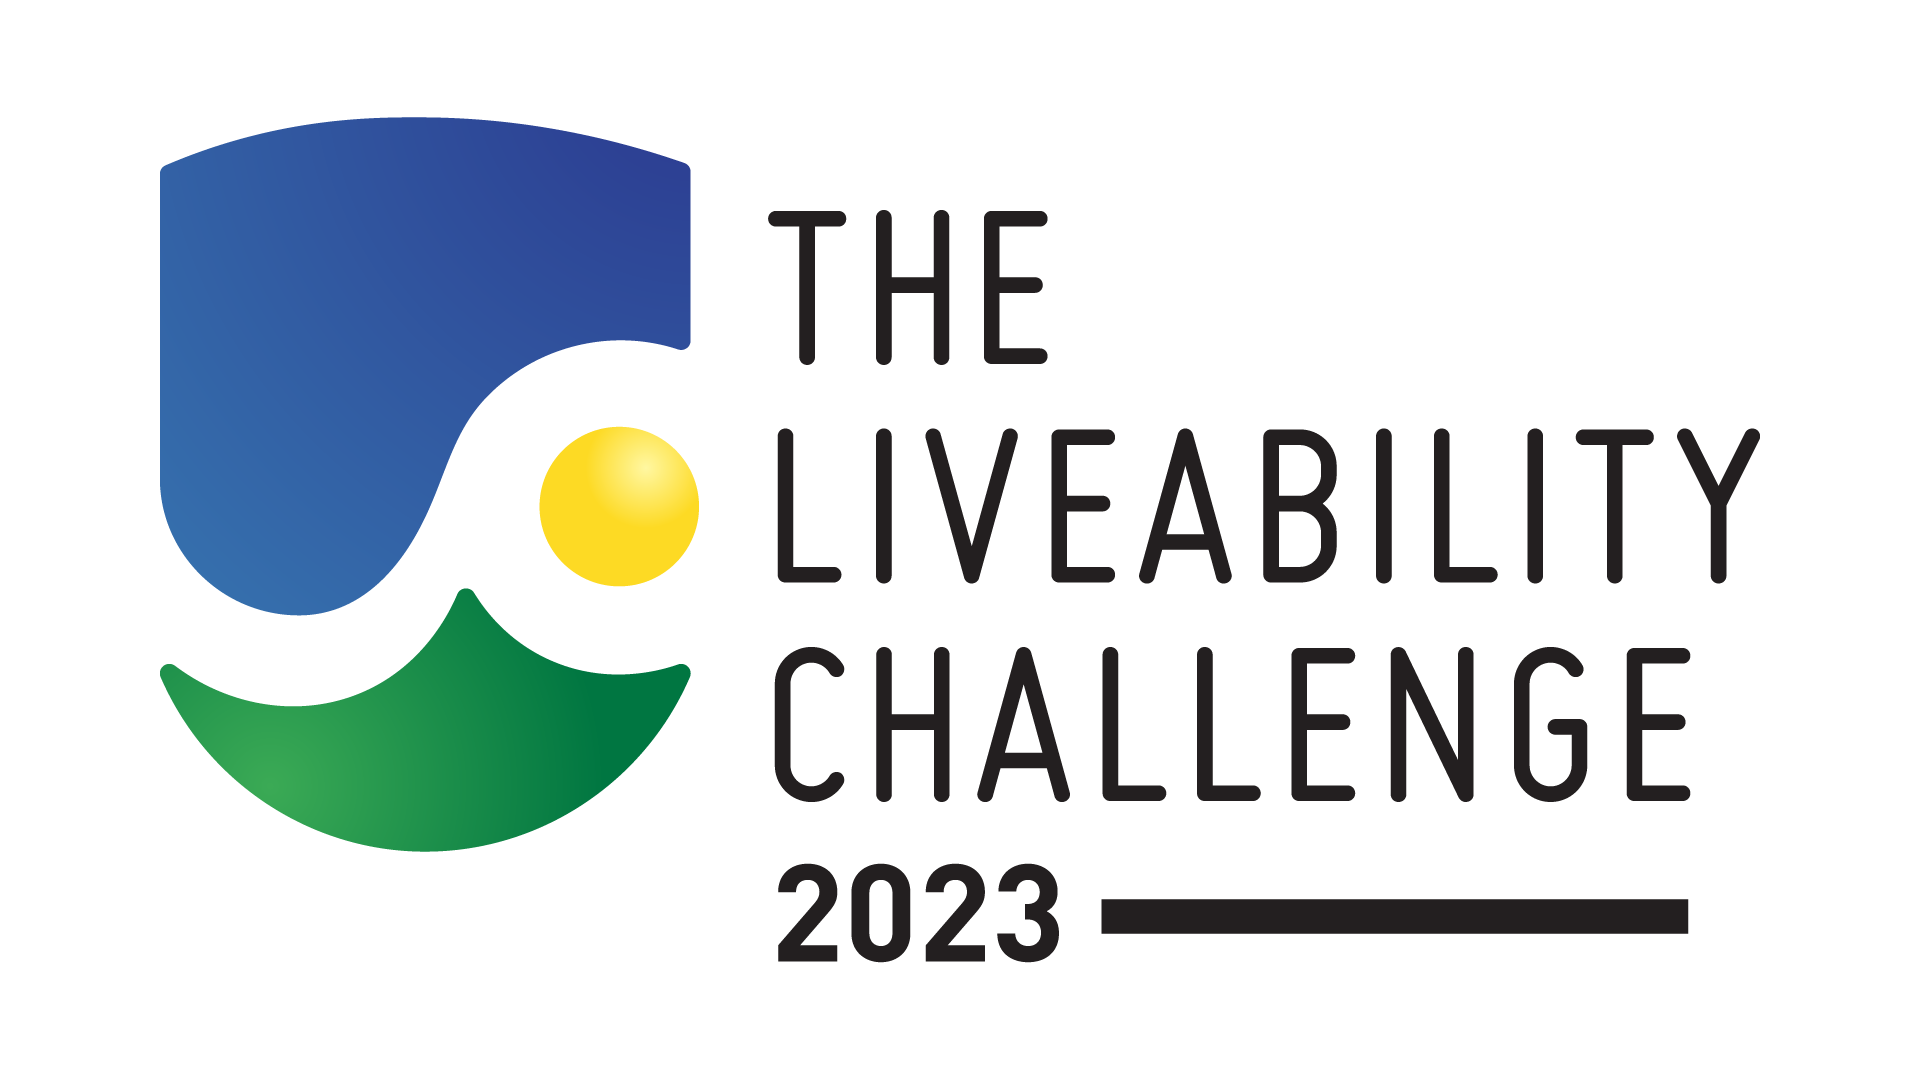 The liveability challenge logo